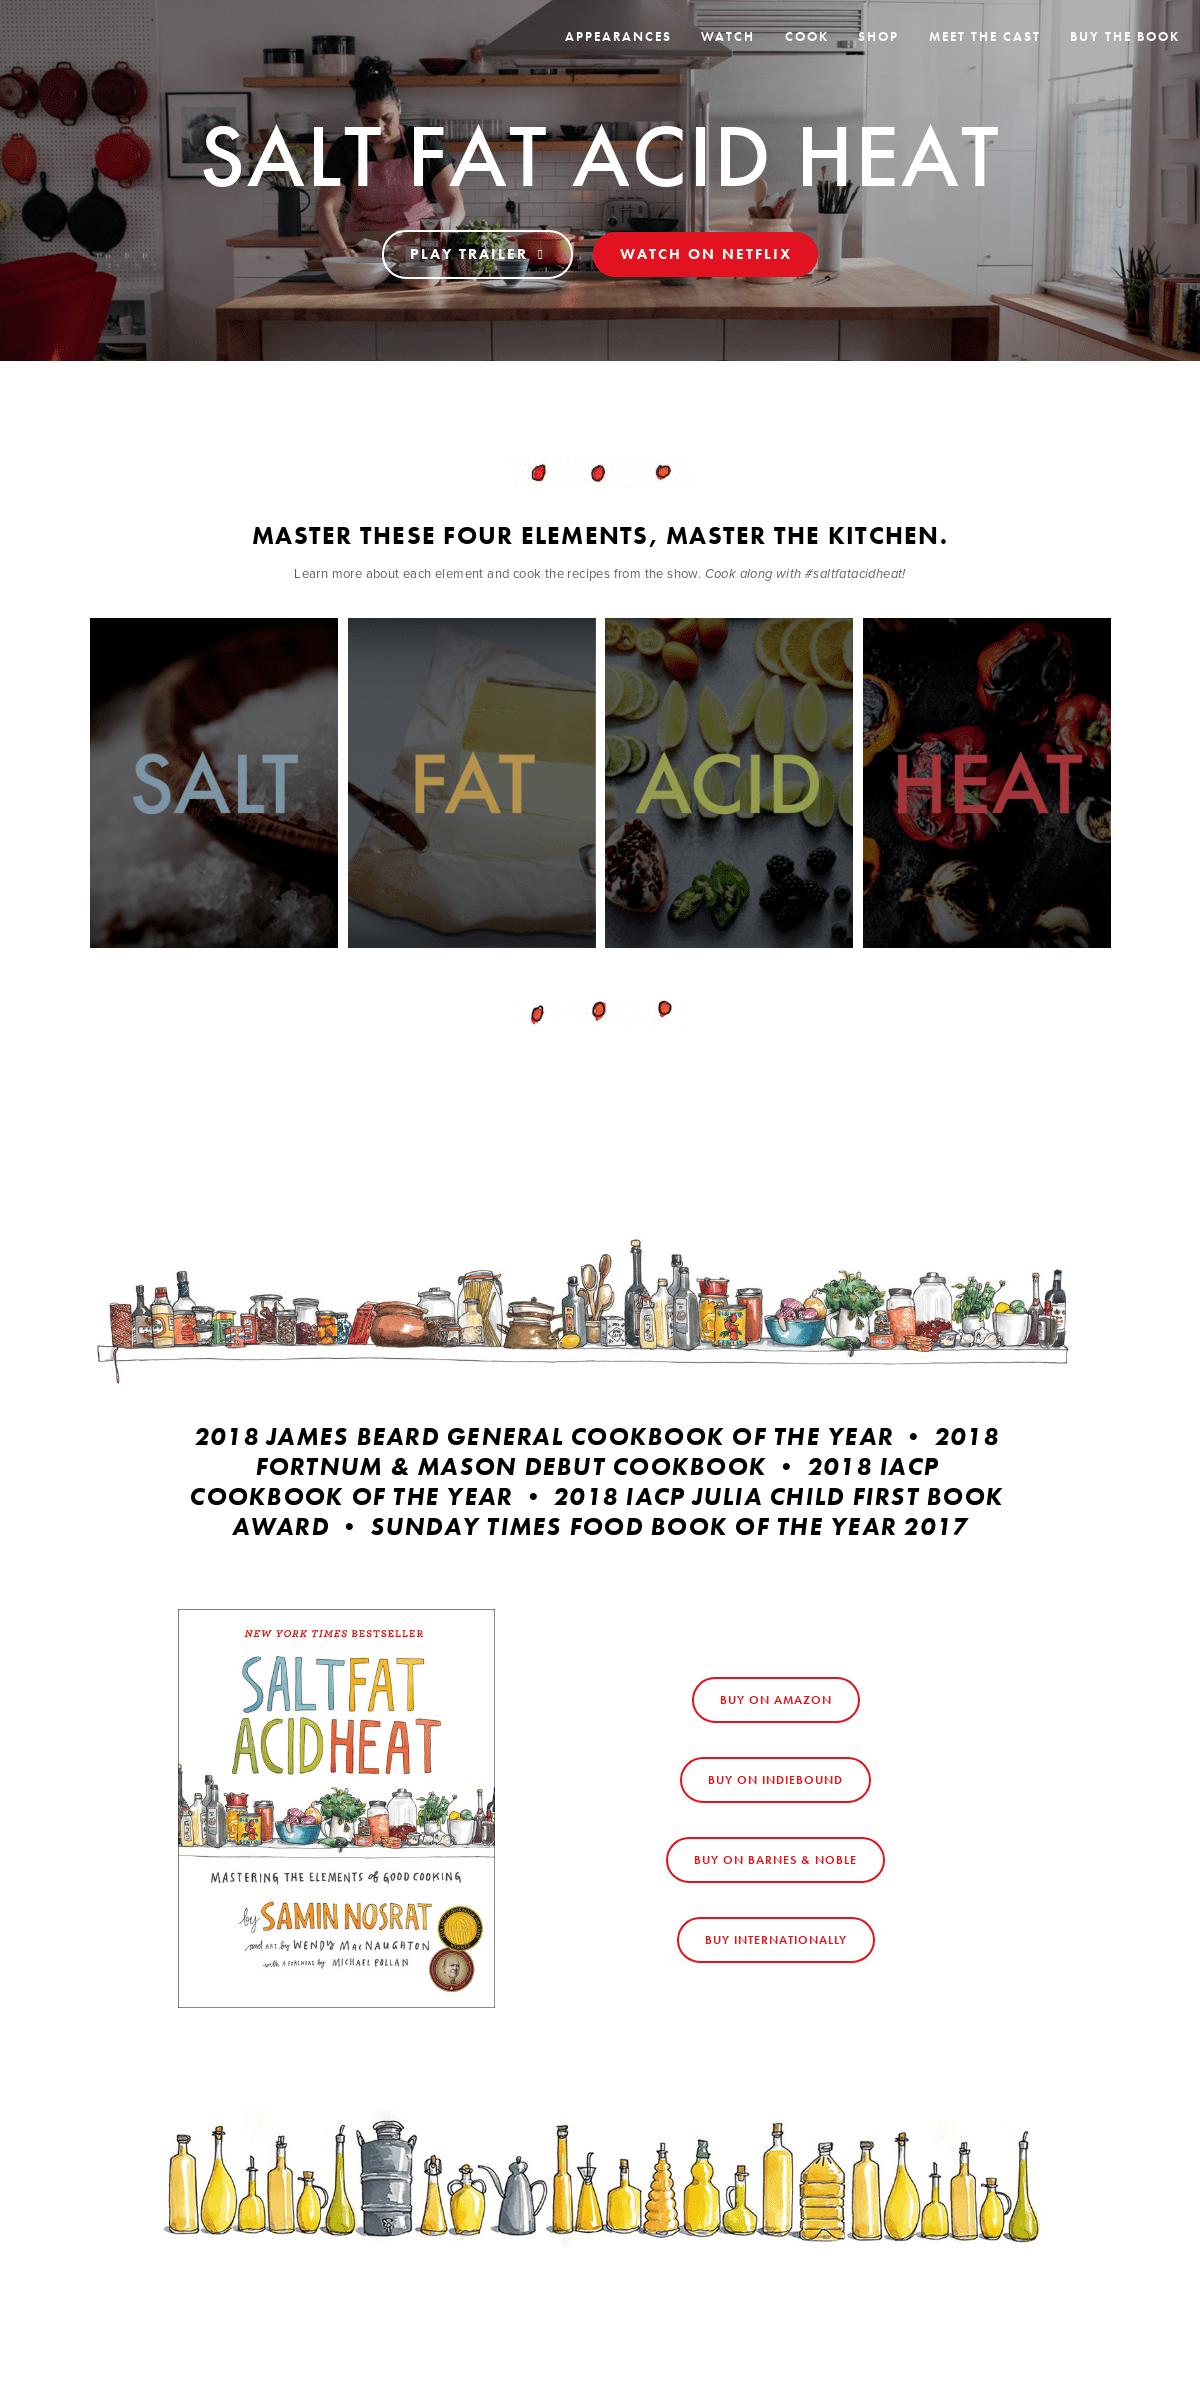 A complete backup of saltfatacidheat.com